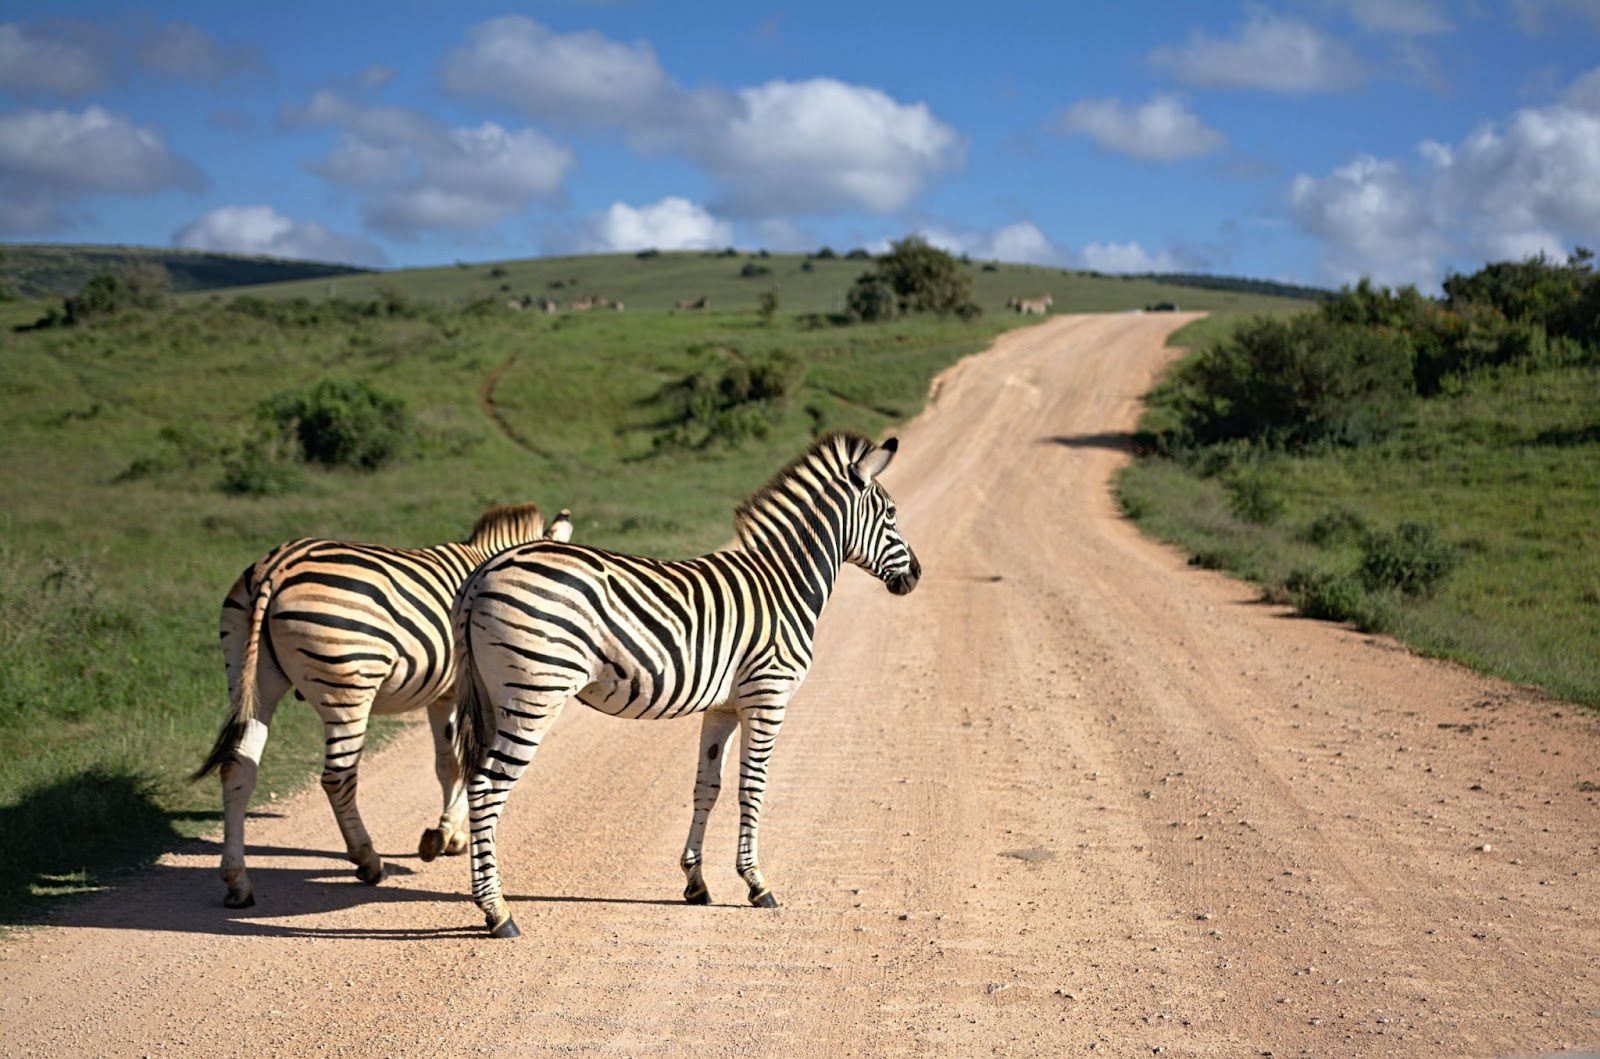 Zebras crossing the gravel road